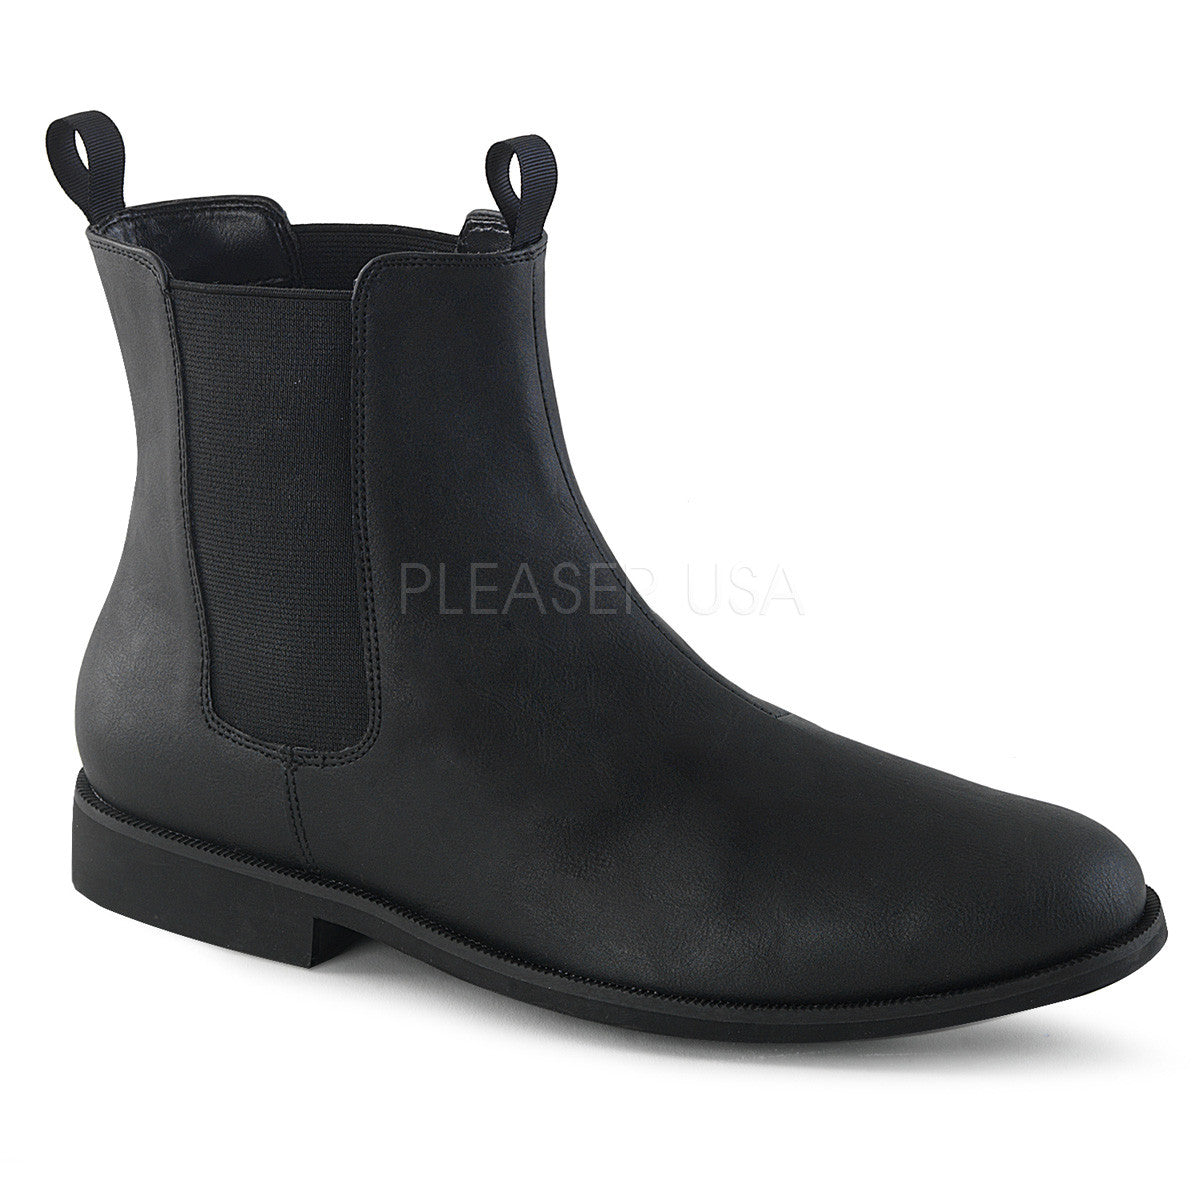 1" (25mm) Men's Pull-on Chelsea Boot With Elastic Side Panels|Funtasma TROOPER-12 Black Pu